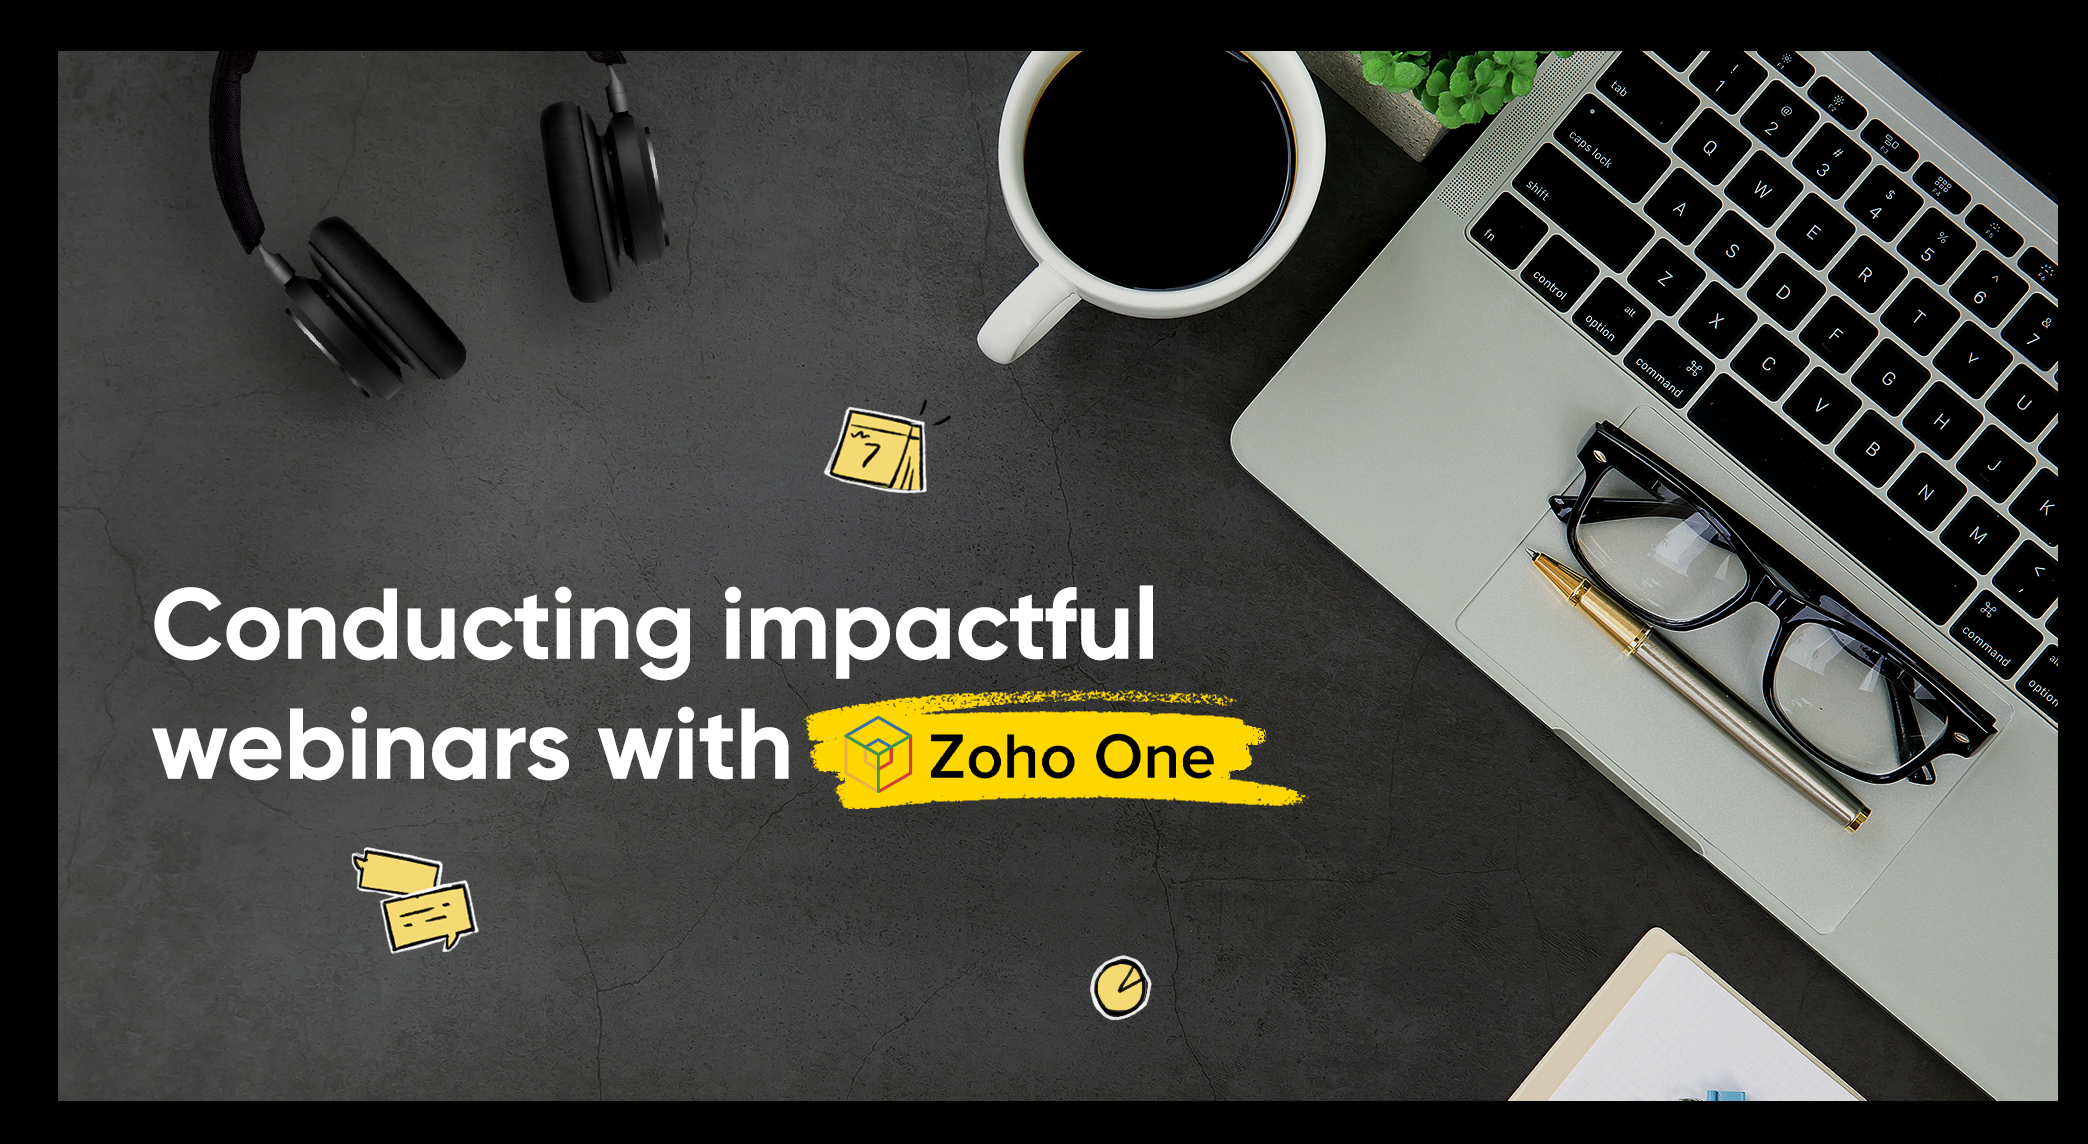 Realice webinars impactantes con Zoho One